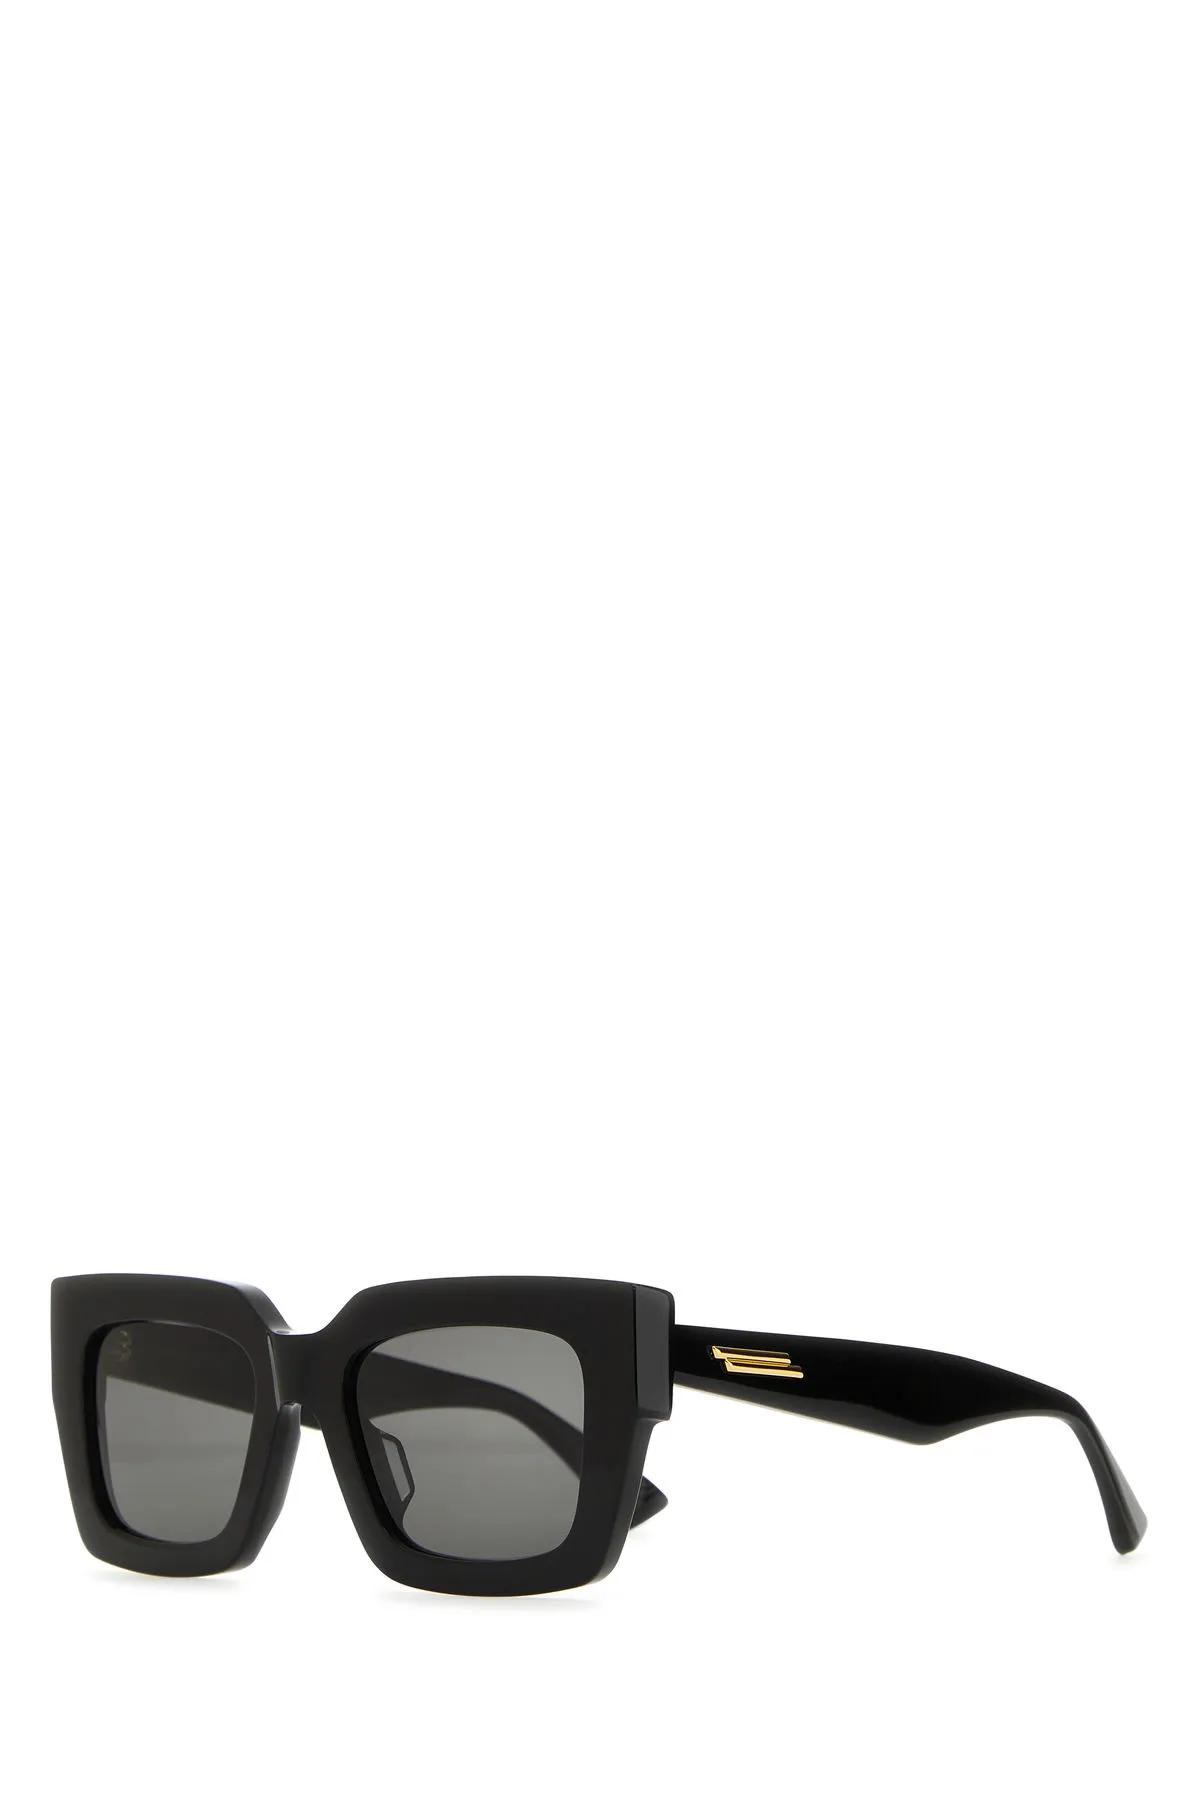 Bottega Veneta Eyewear Black Acetate Sunglasses